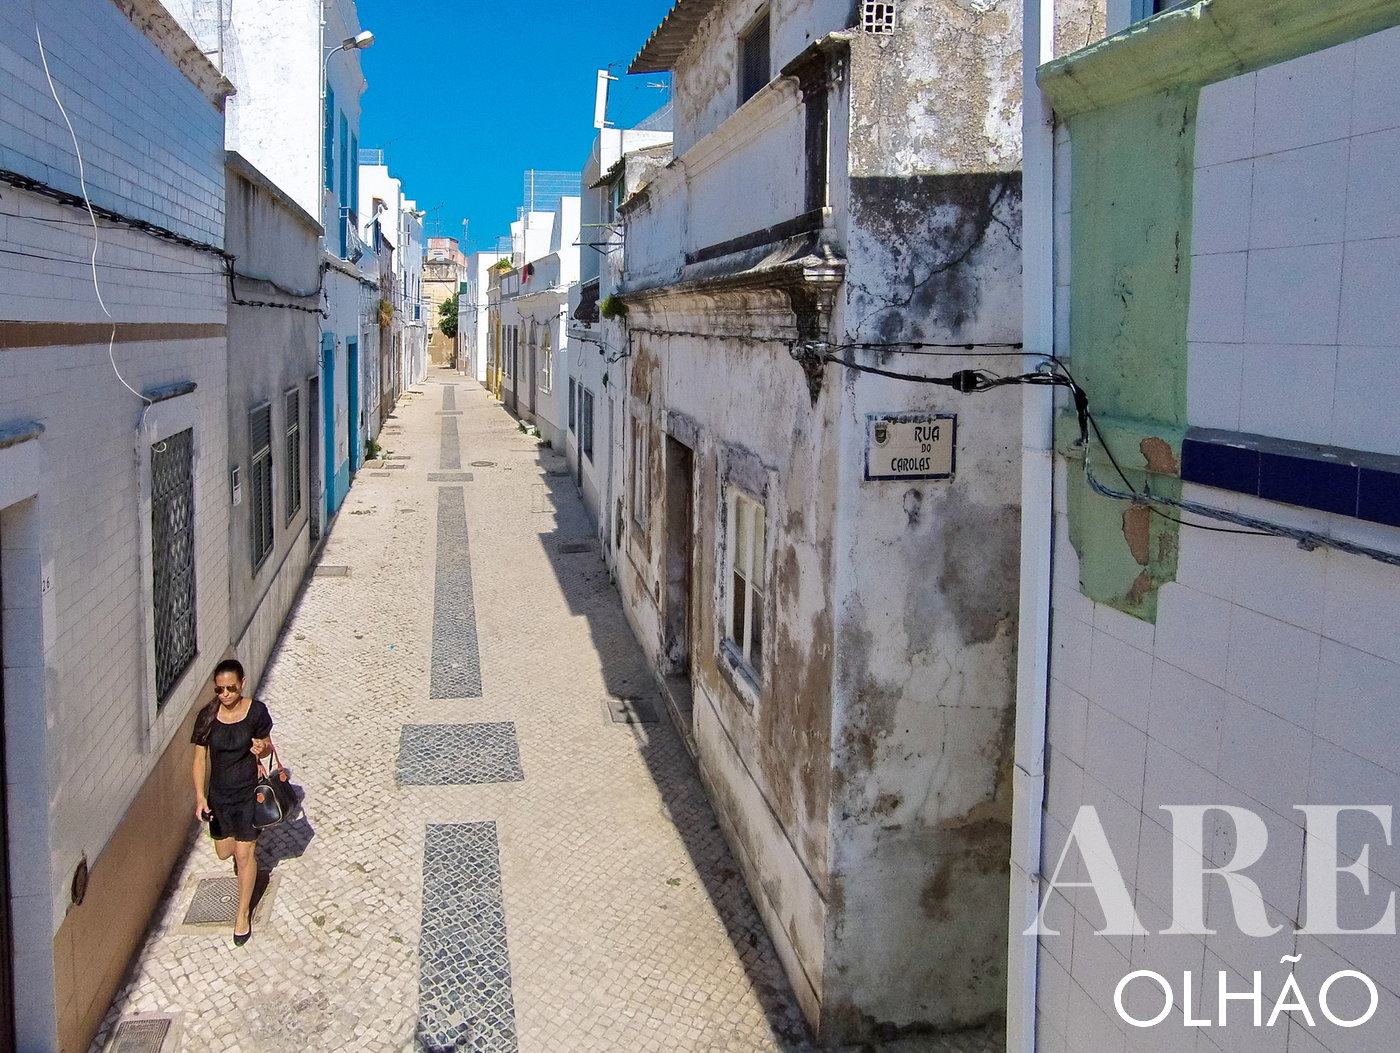 Olhão's Barreta District: Narrow Streetscape